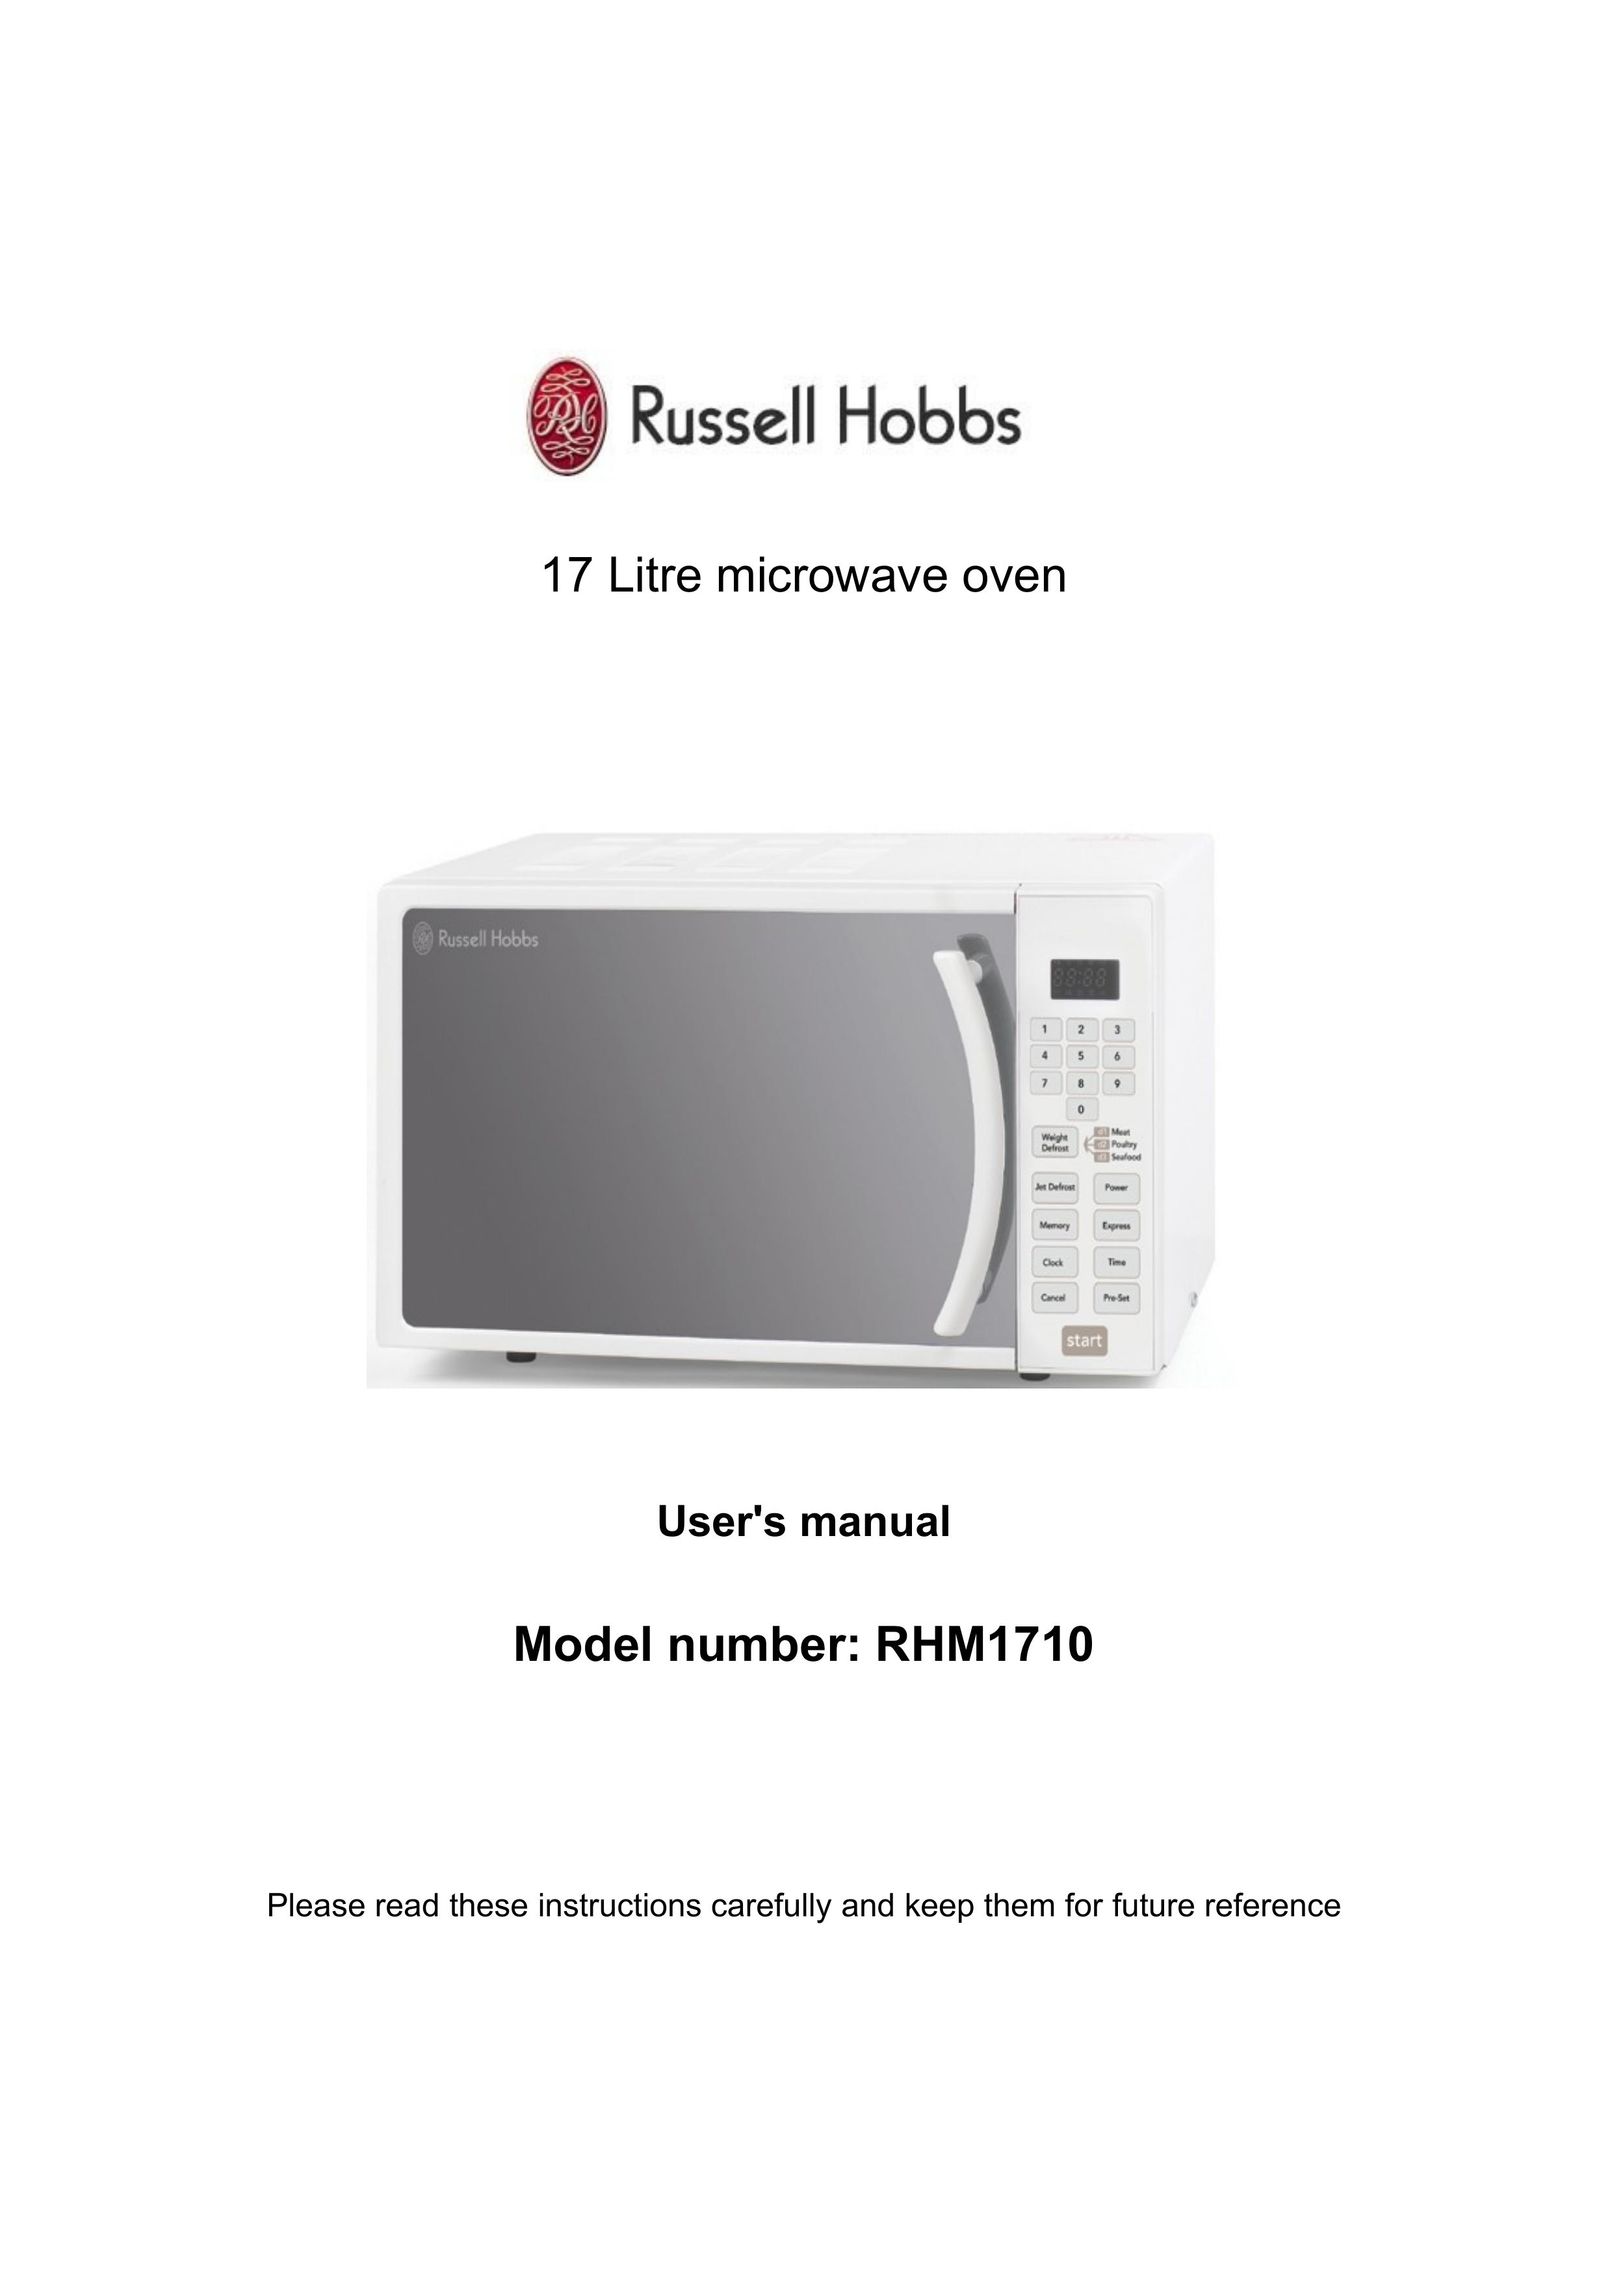 Russell Hobbs RHM1710 Microwave Oven User Manual